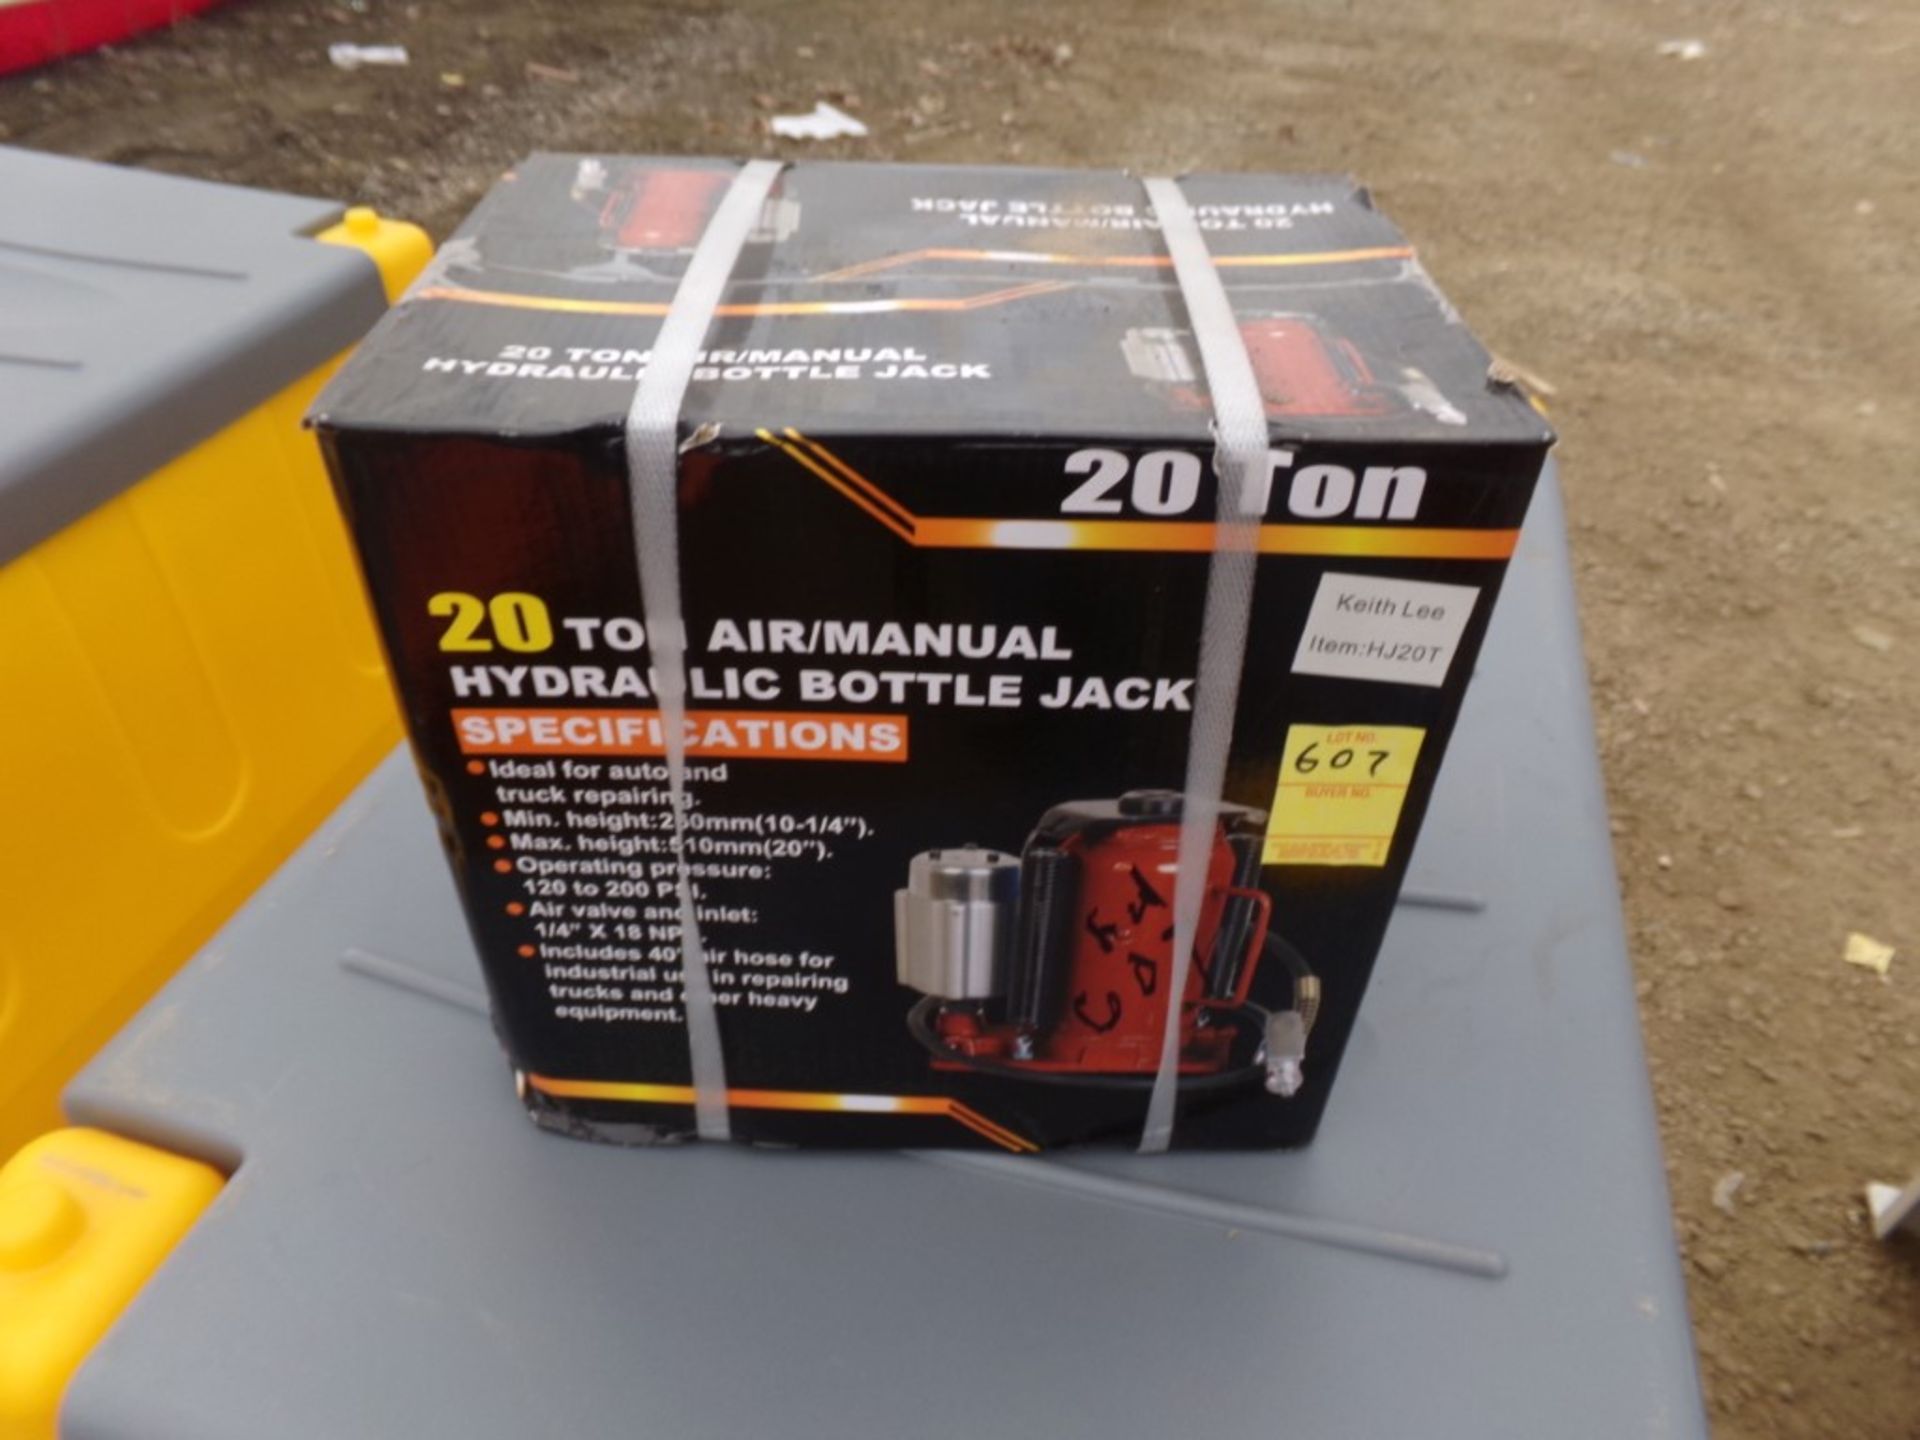 New, 20-Ton, Air/Manual Bottle Jack